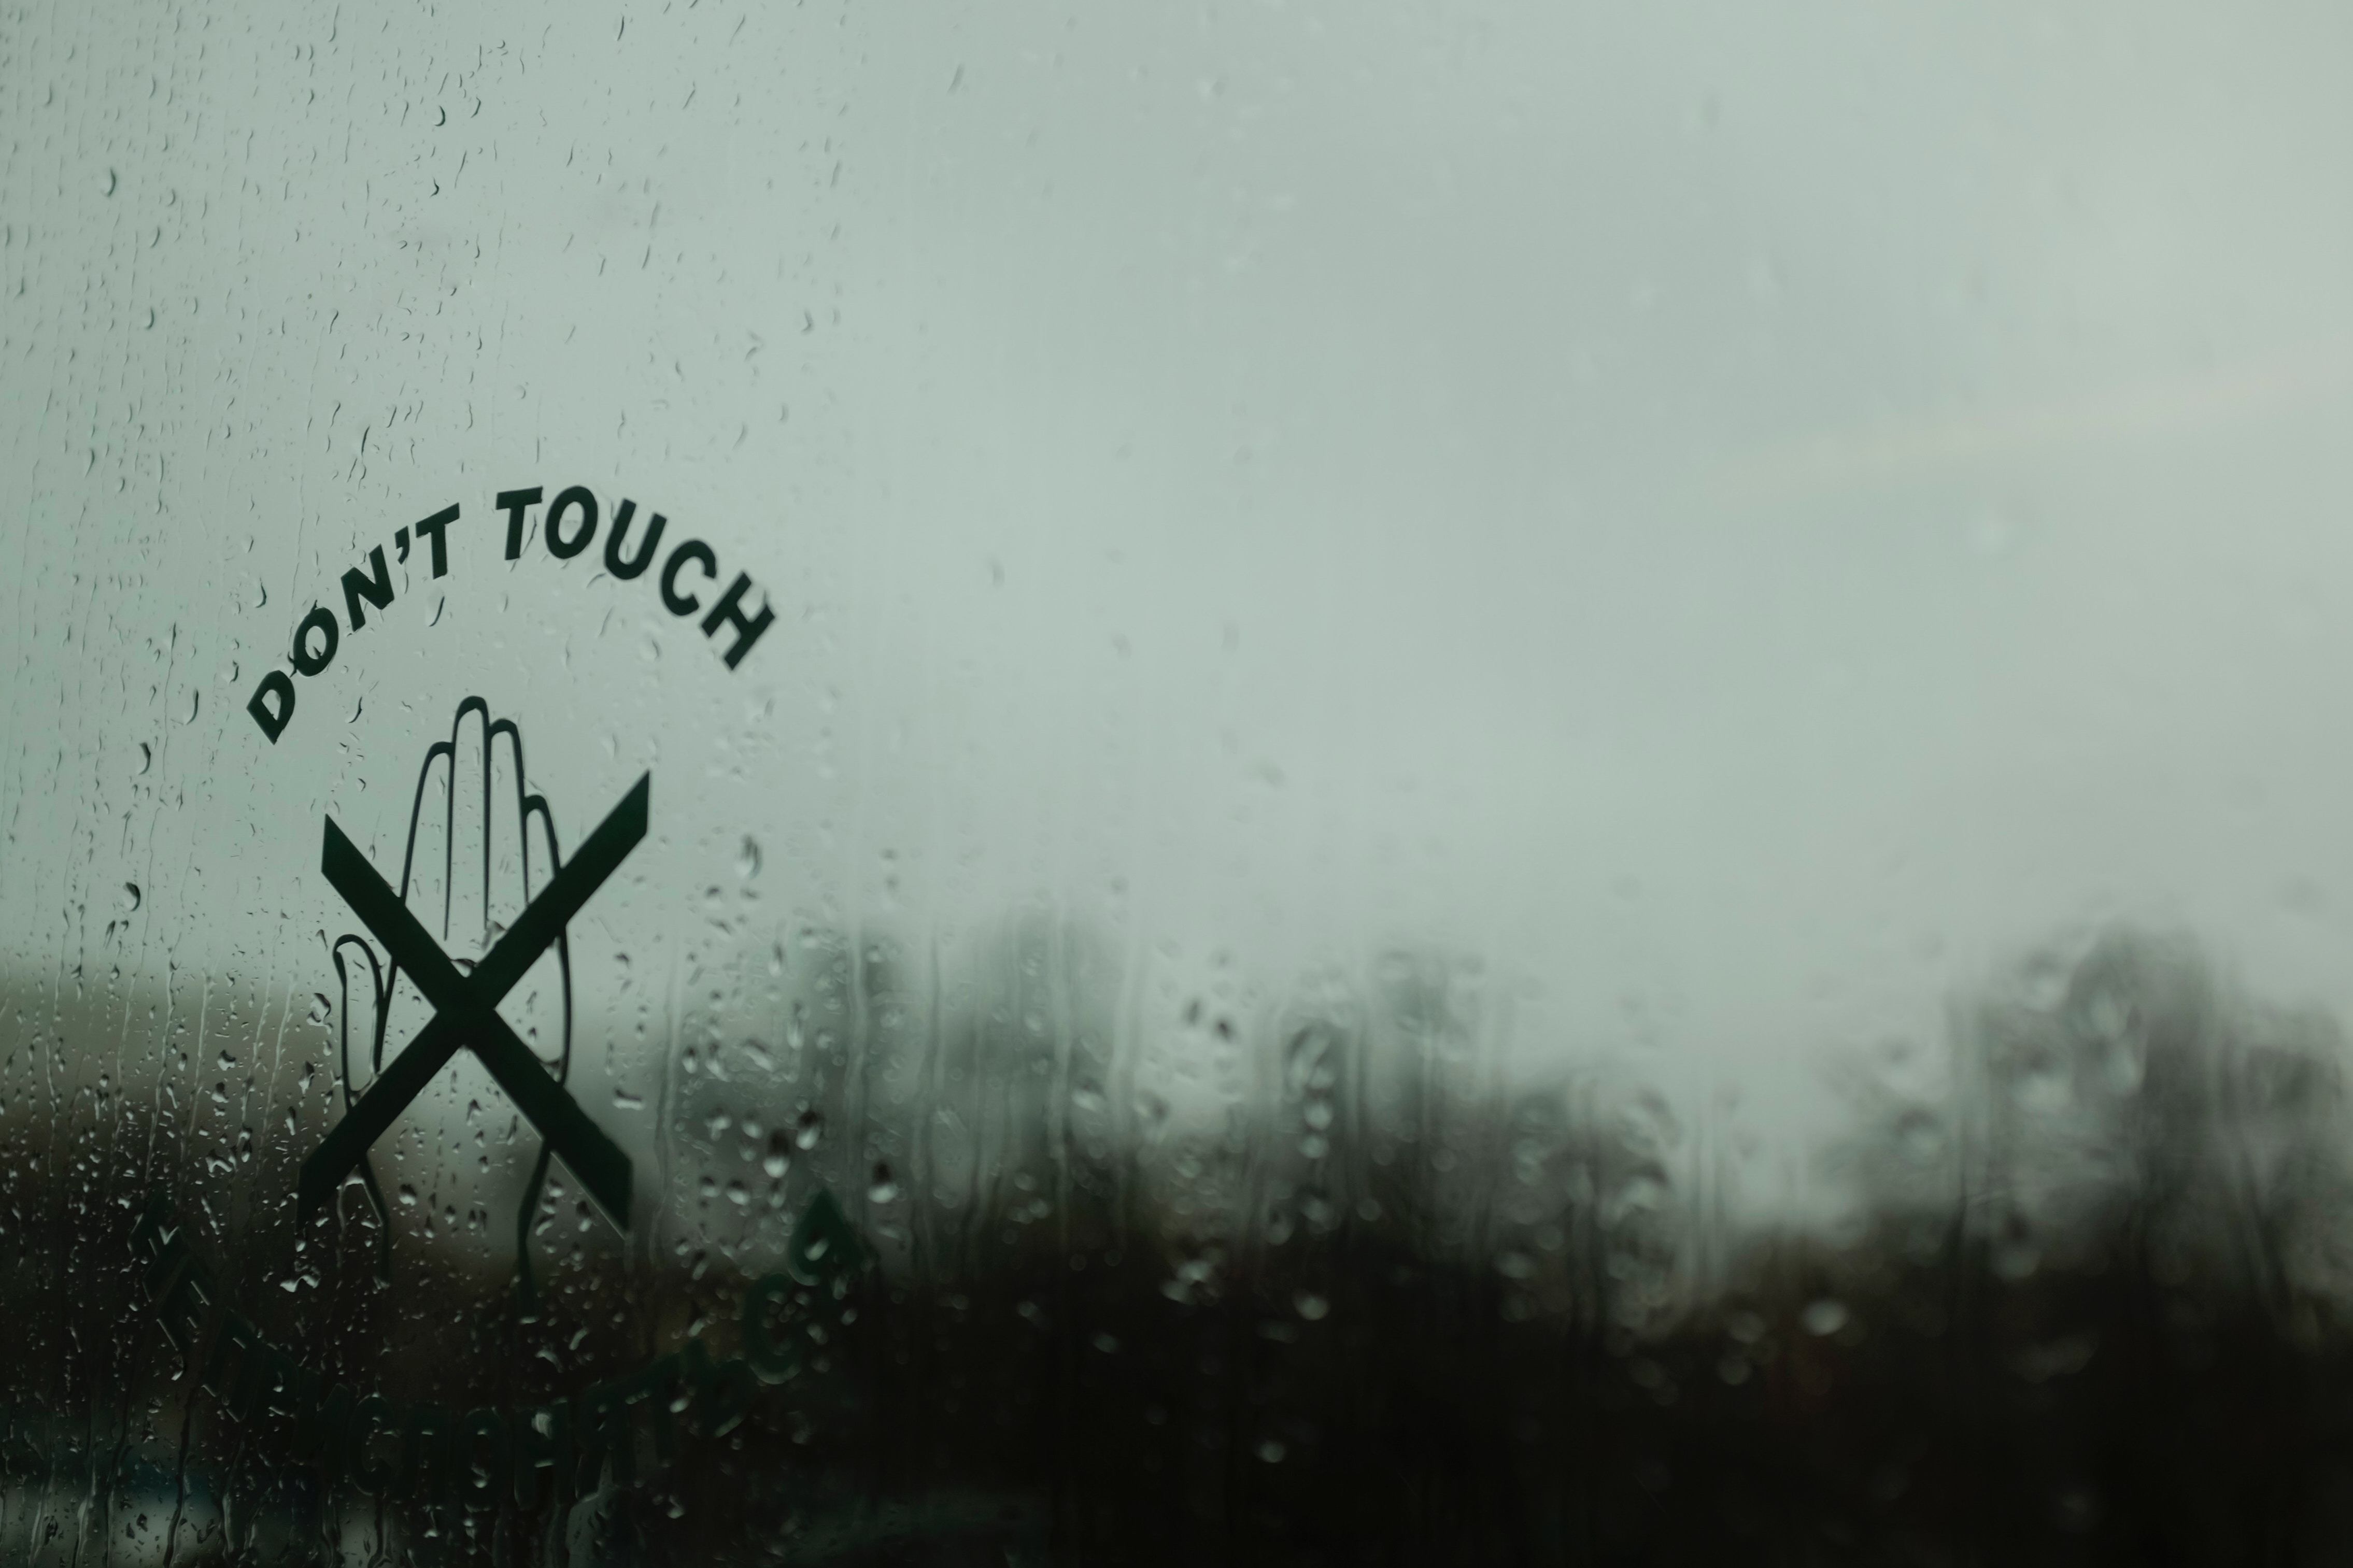 moisture, rain, drops, words, glass, inscription, touching, touch cellphone